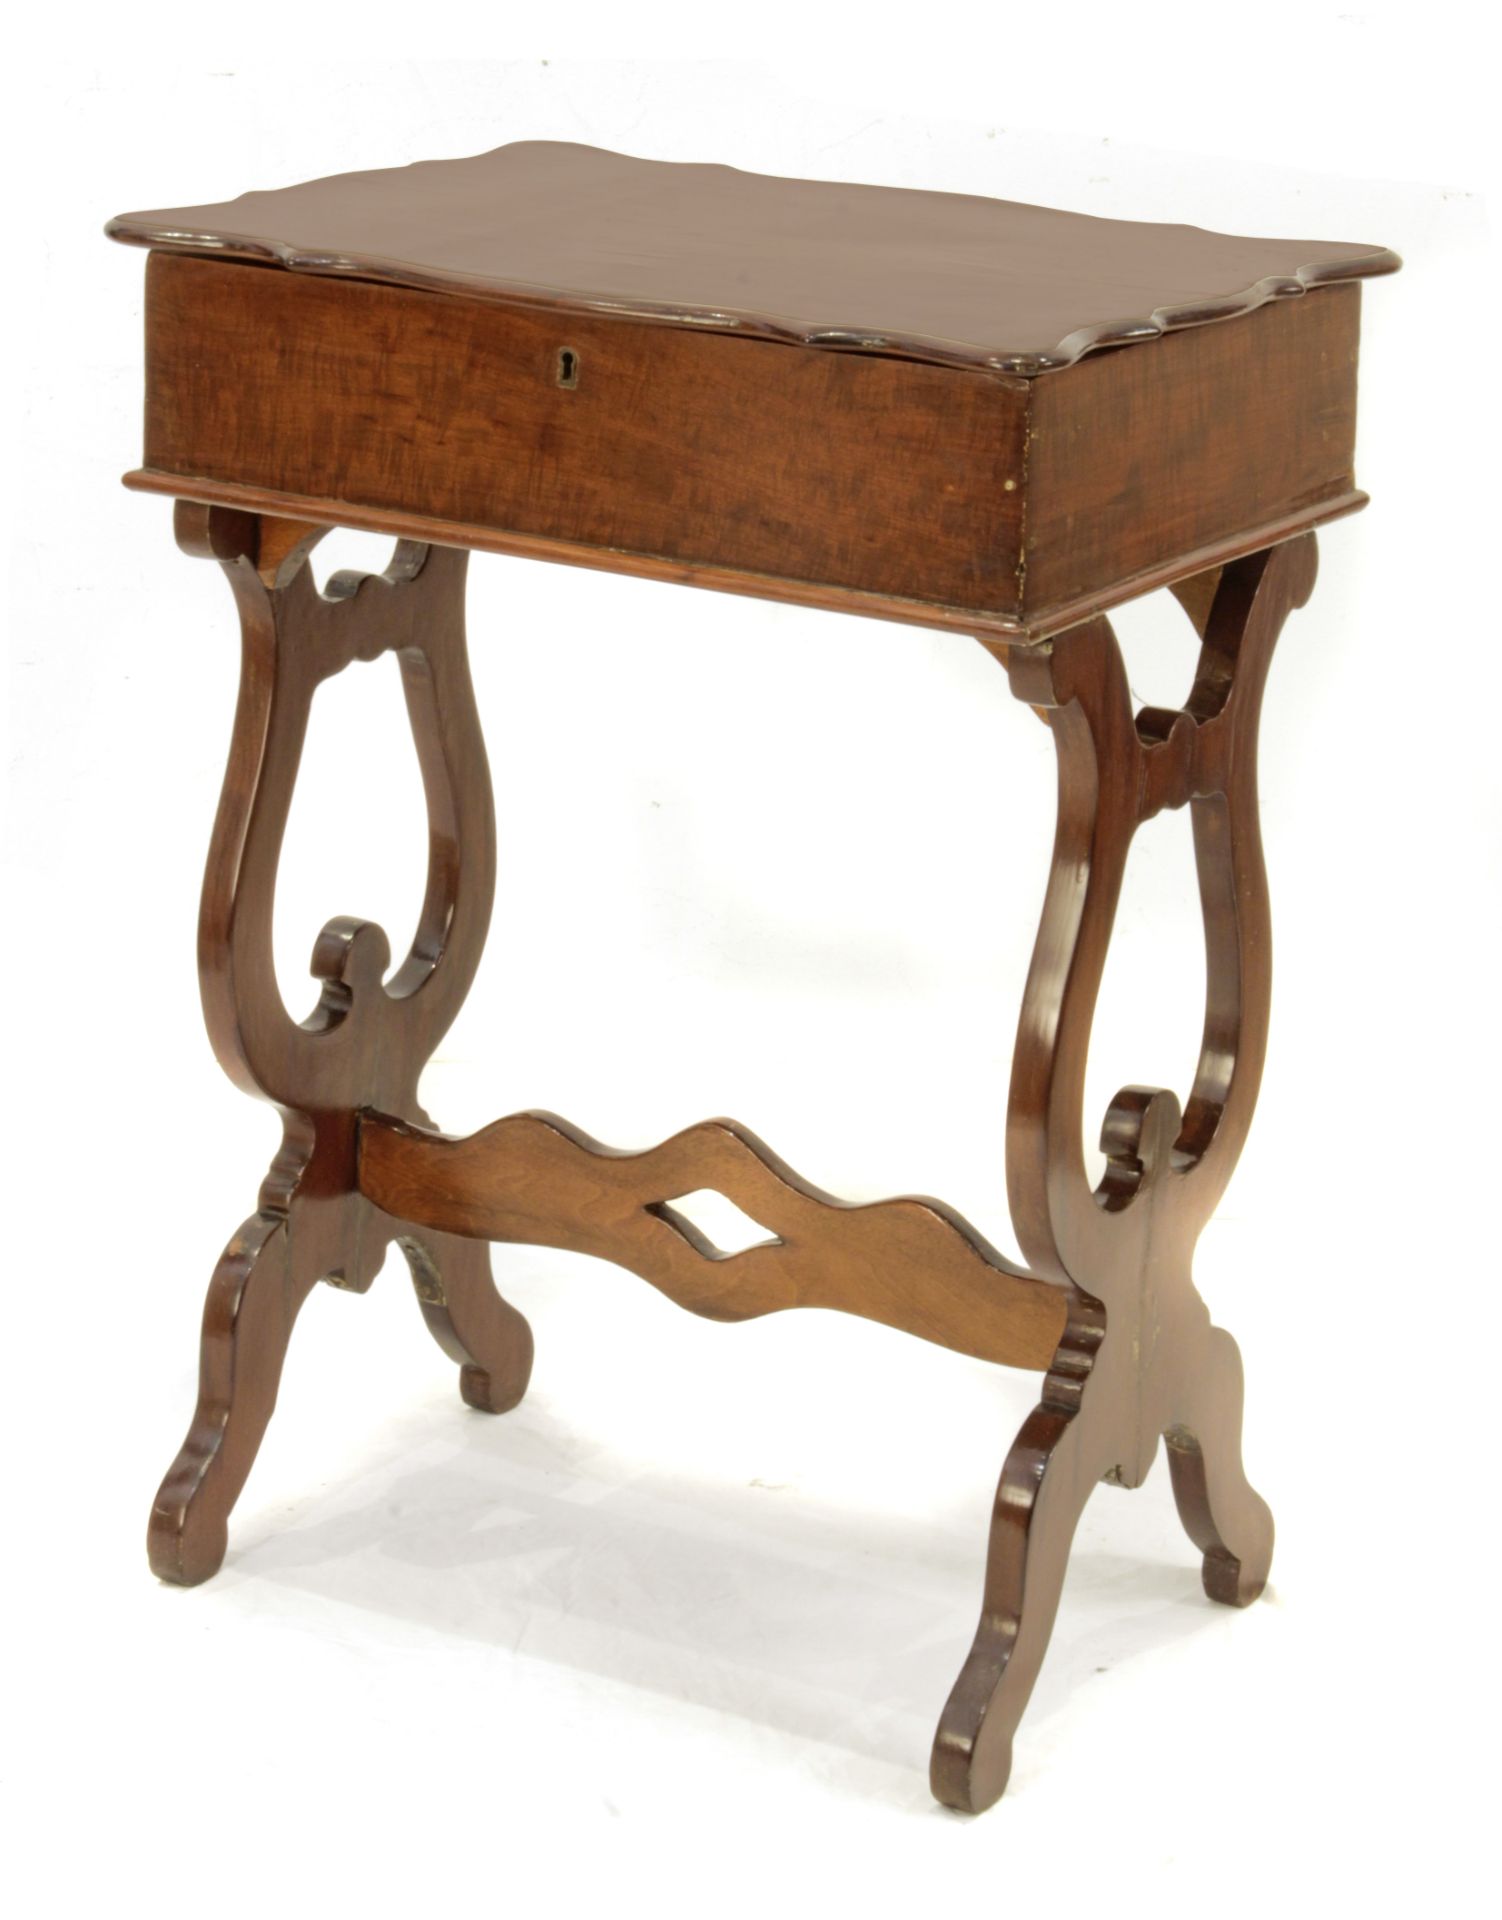 A 19th century Spanish Isabelino mahogany sewing table